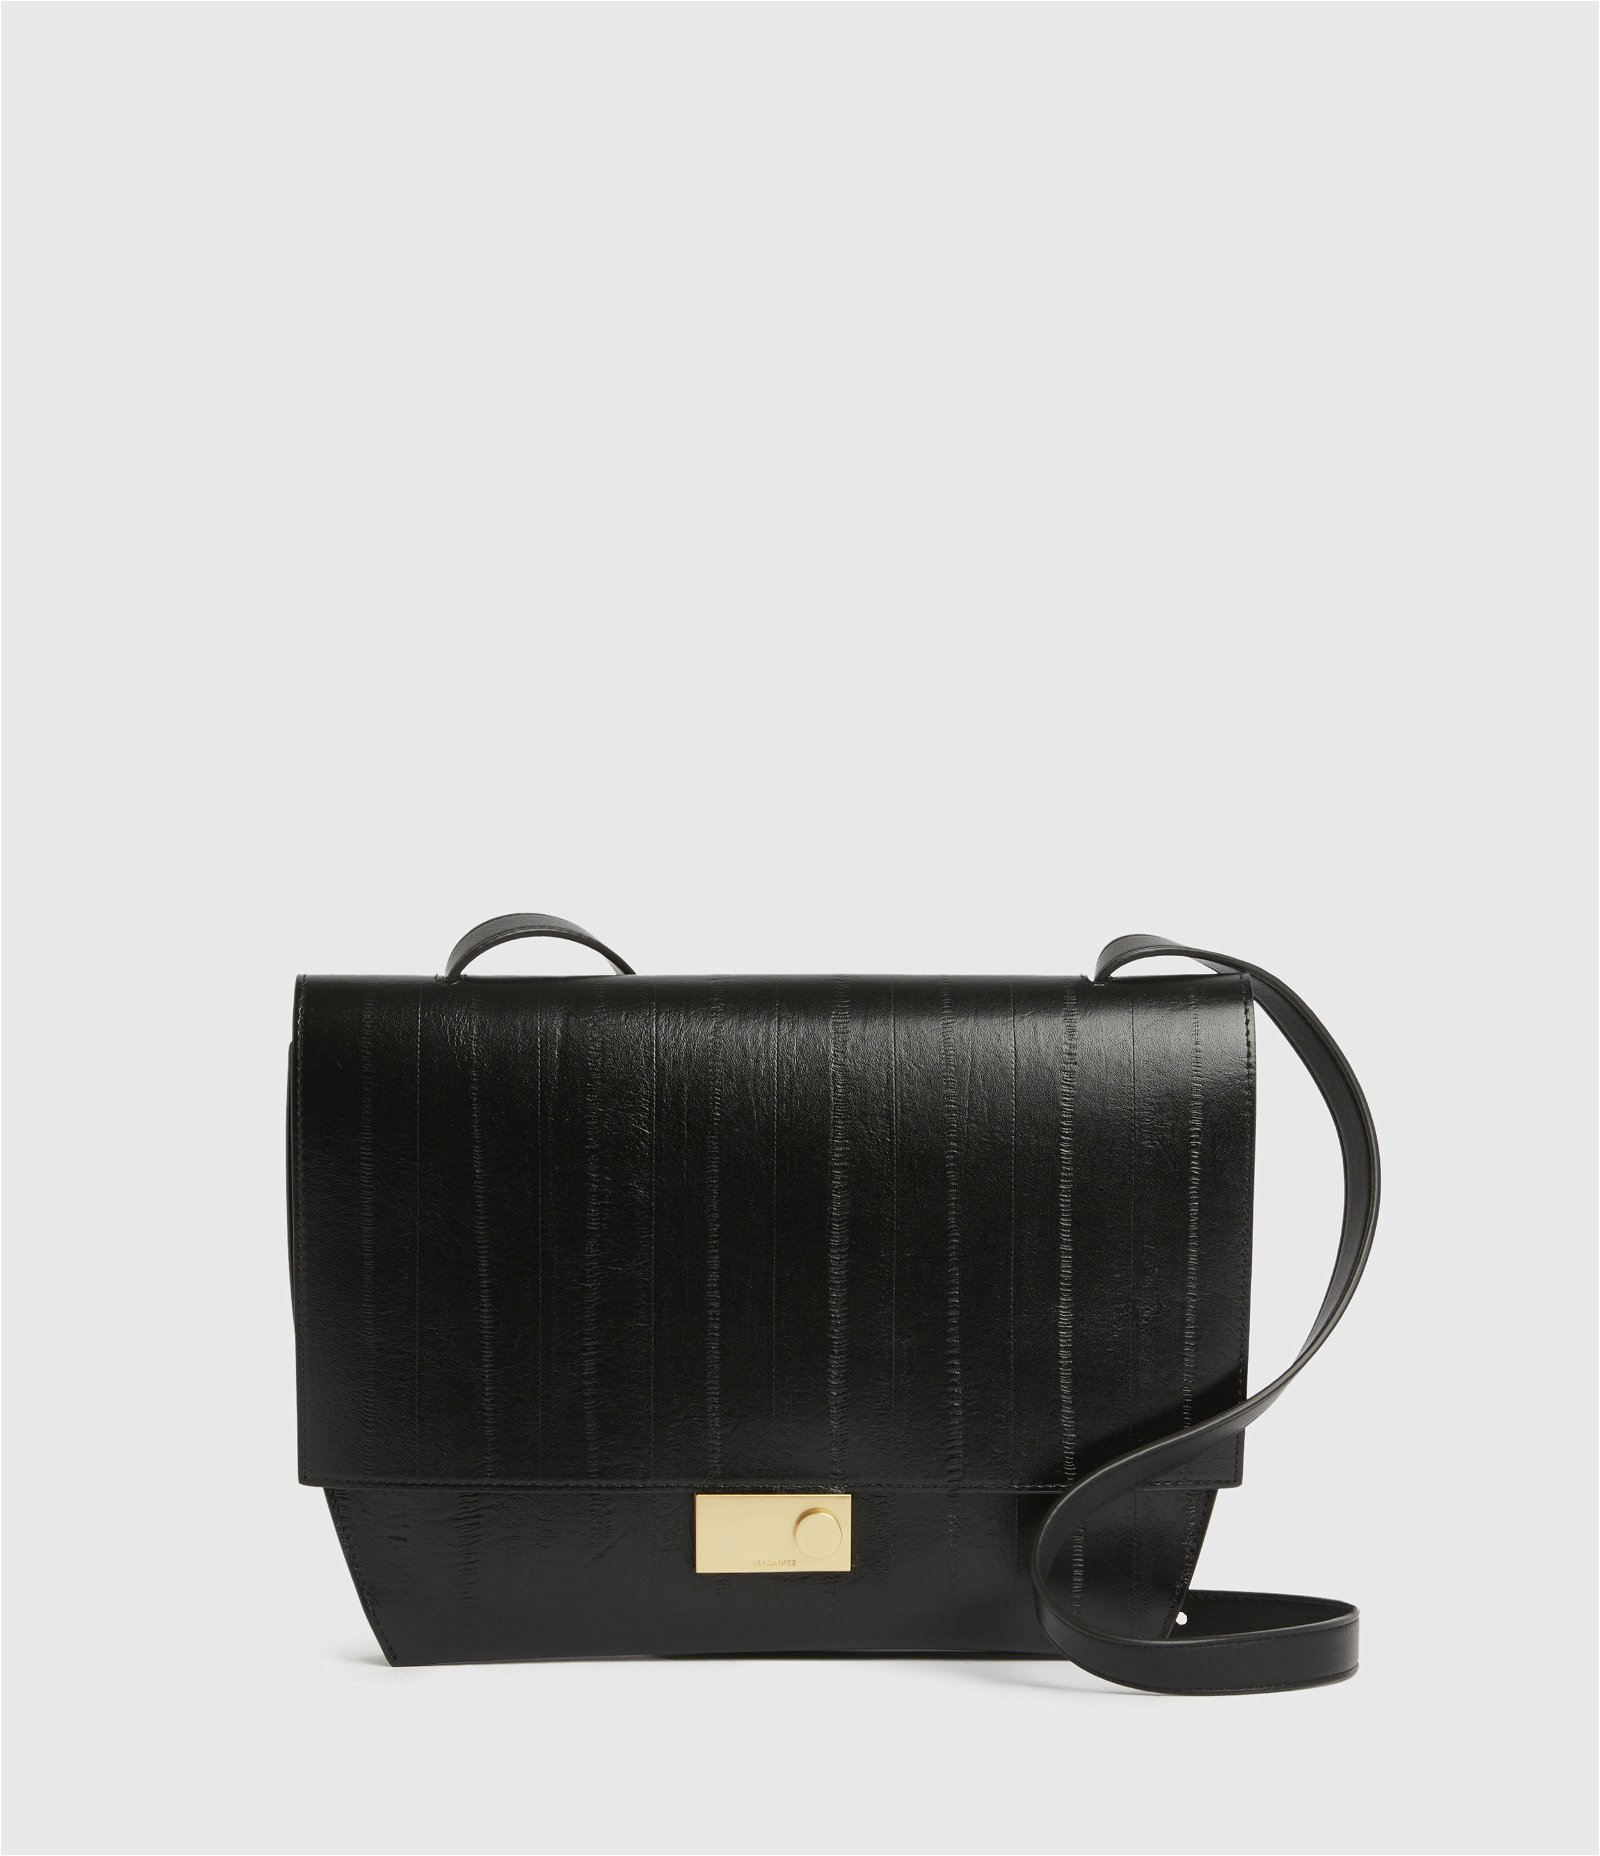 Buy AllSaints Lucile Crossbody Black Bag from Next USA